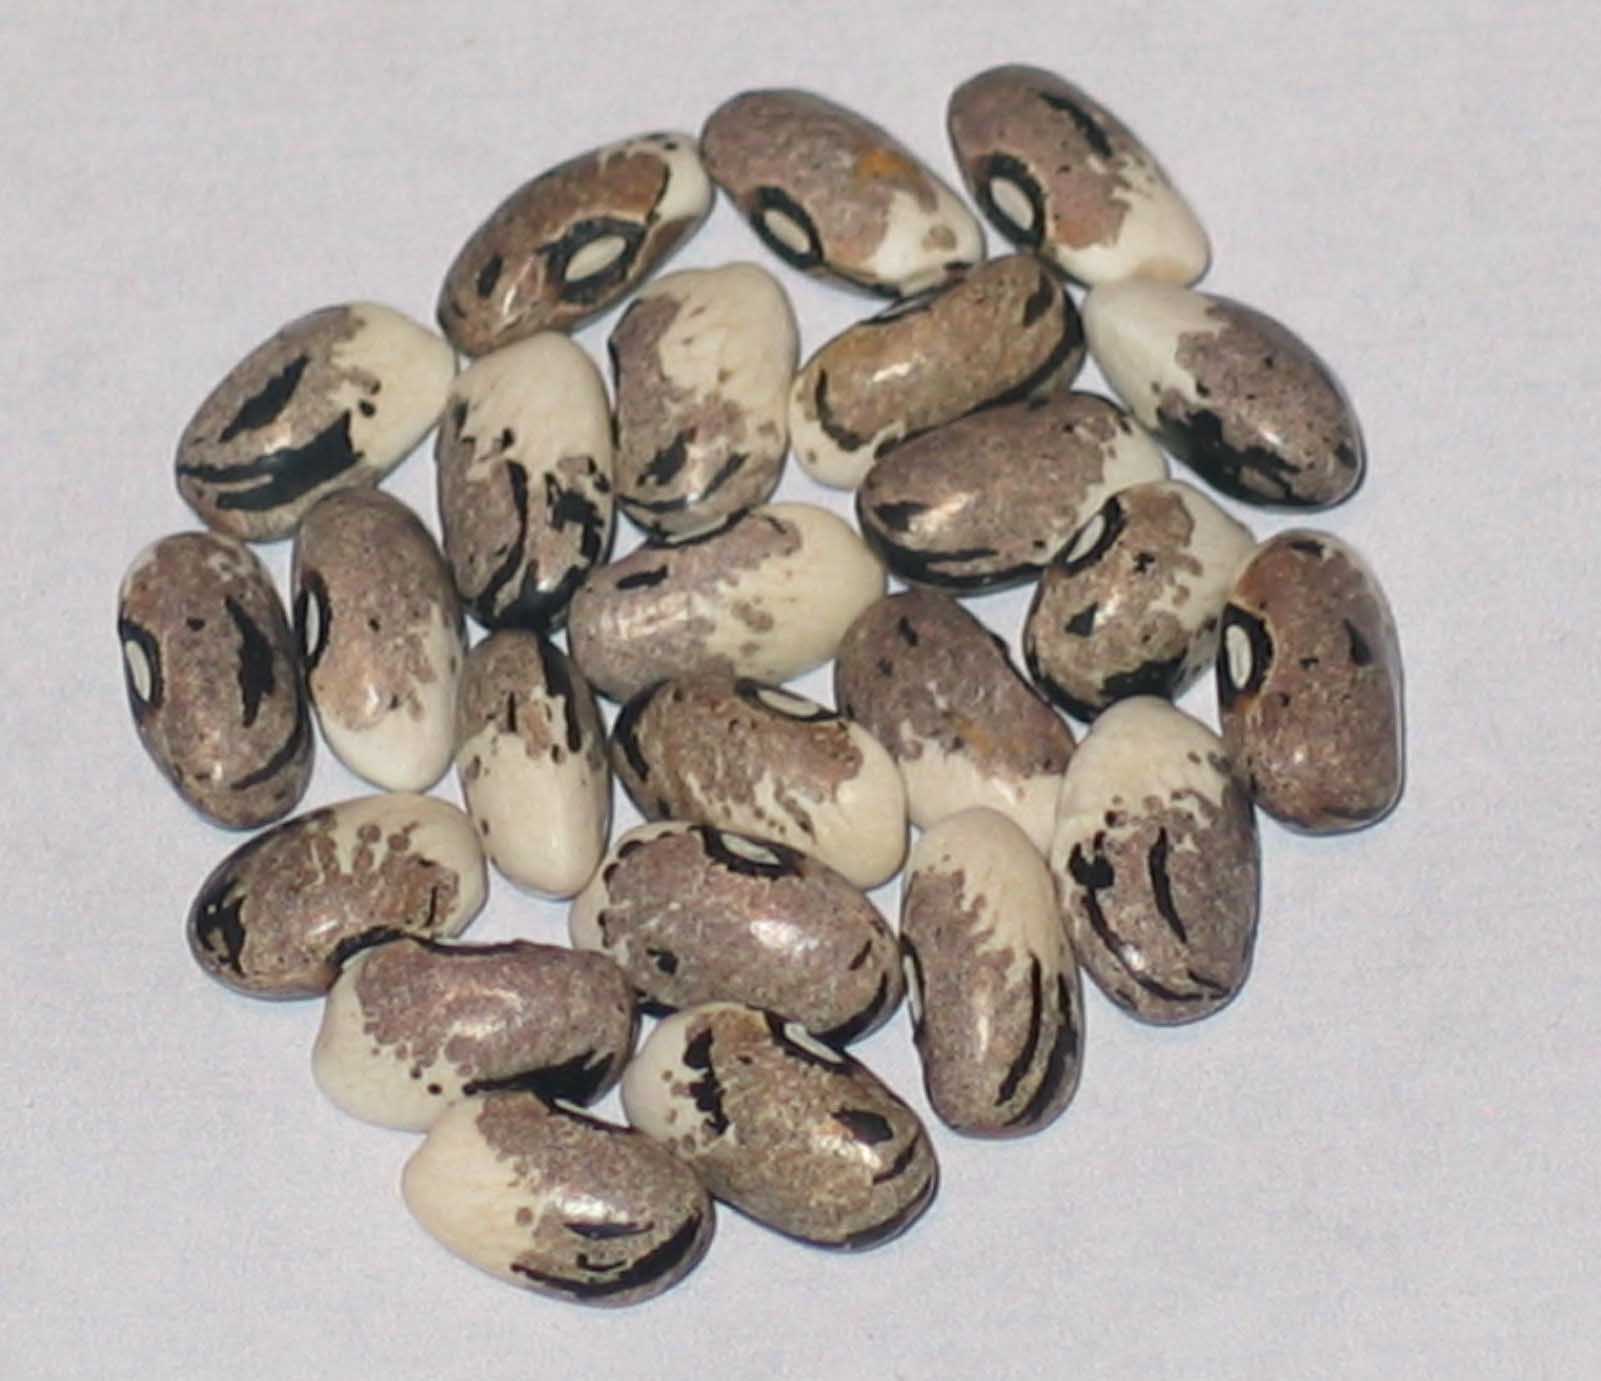 image of Skunk Bean beans